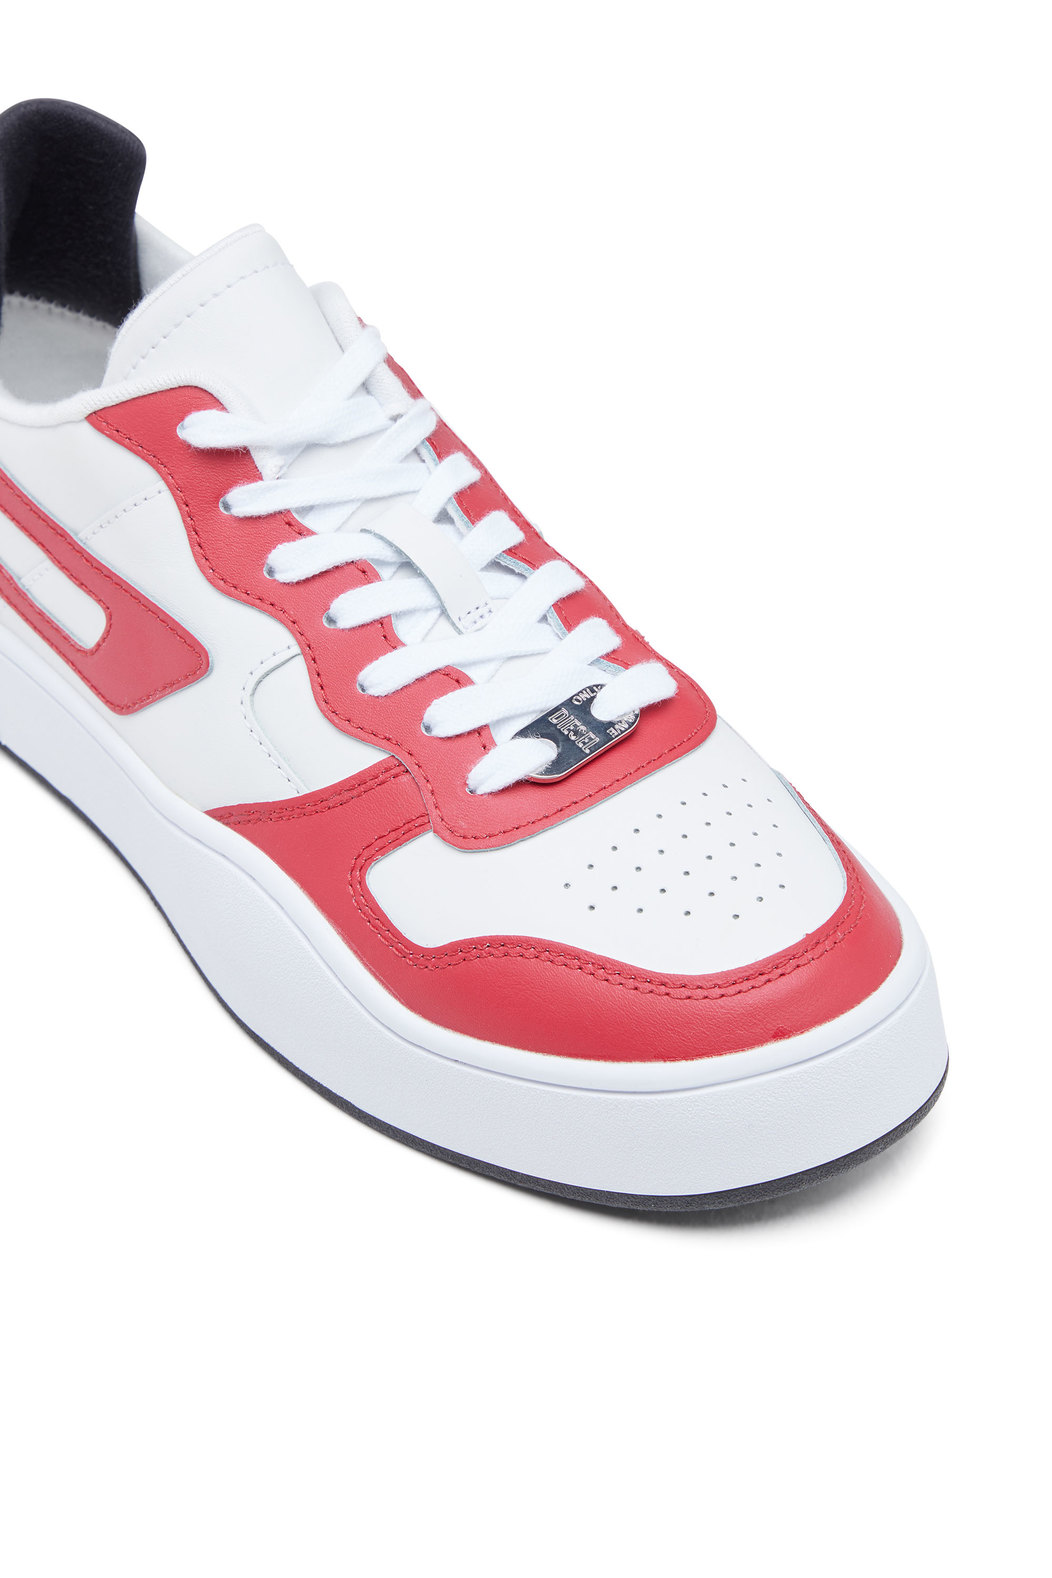 S-Ukiyo Low - Sneakers with contrast overlays